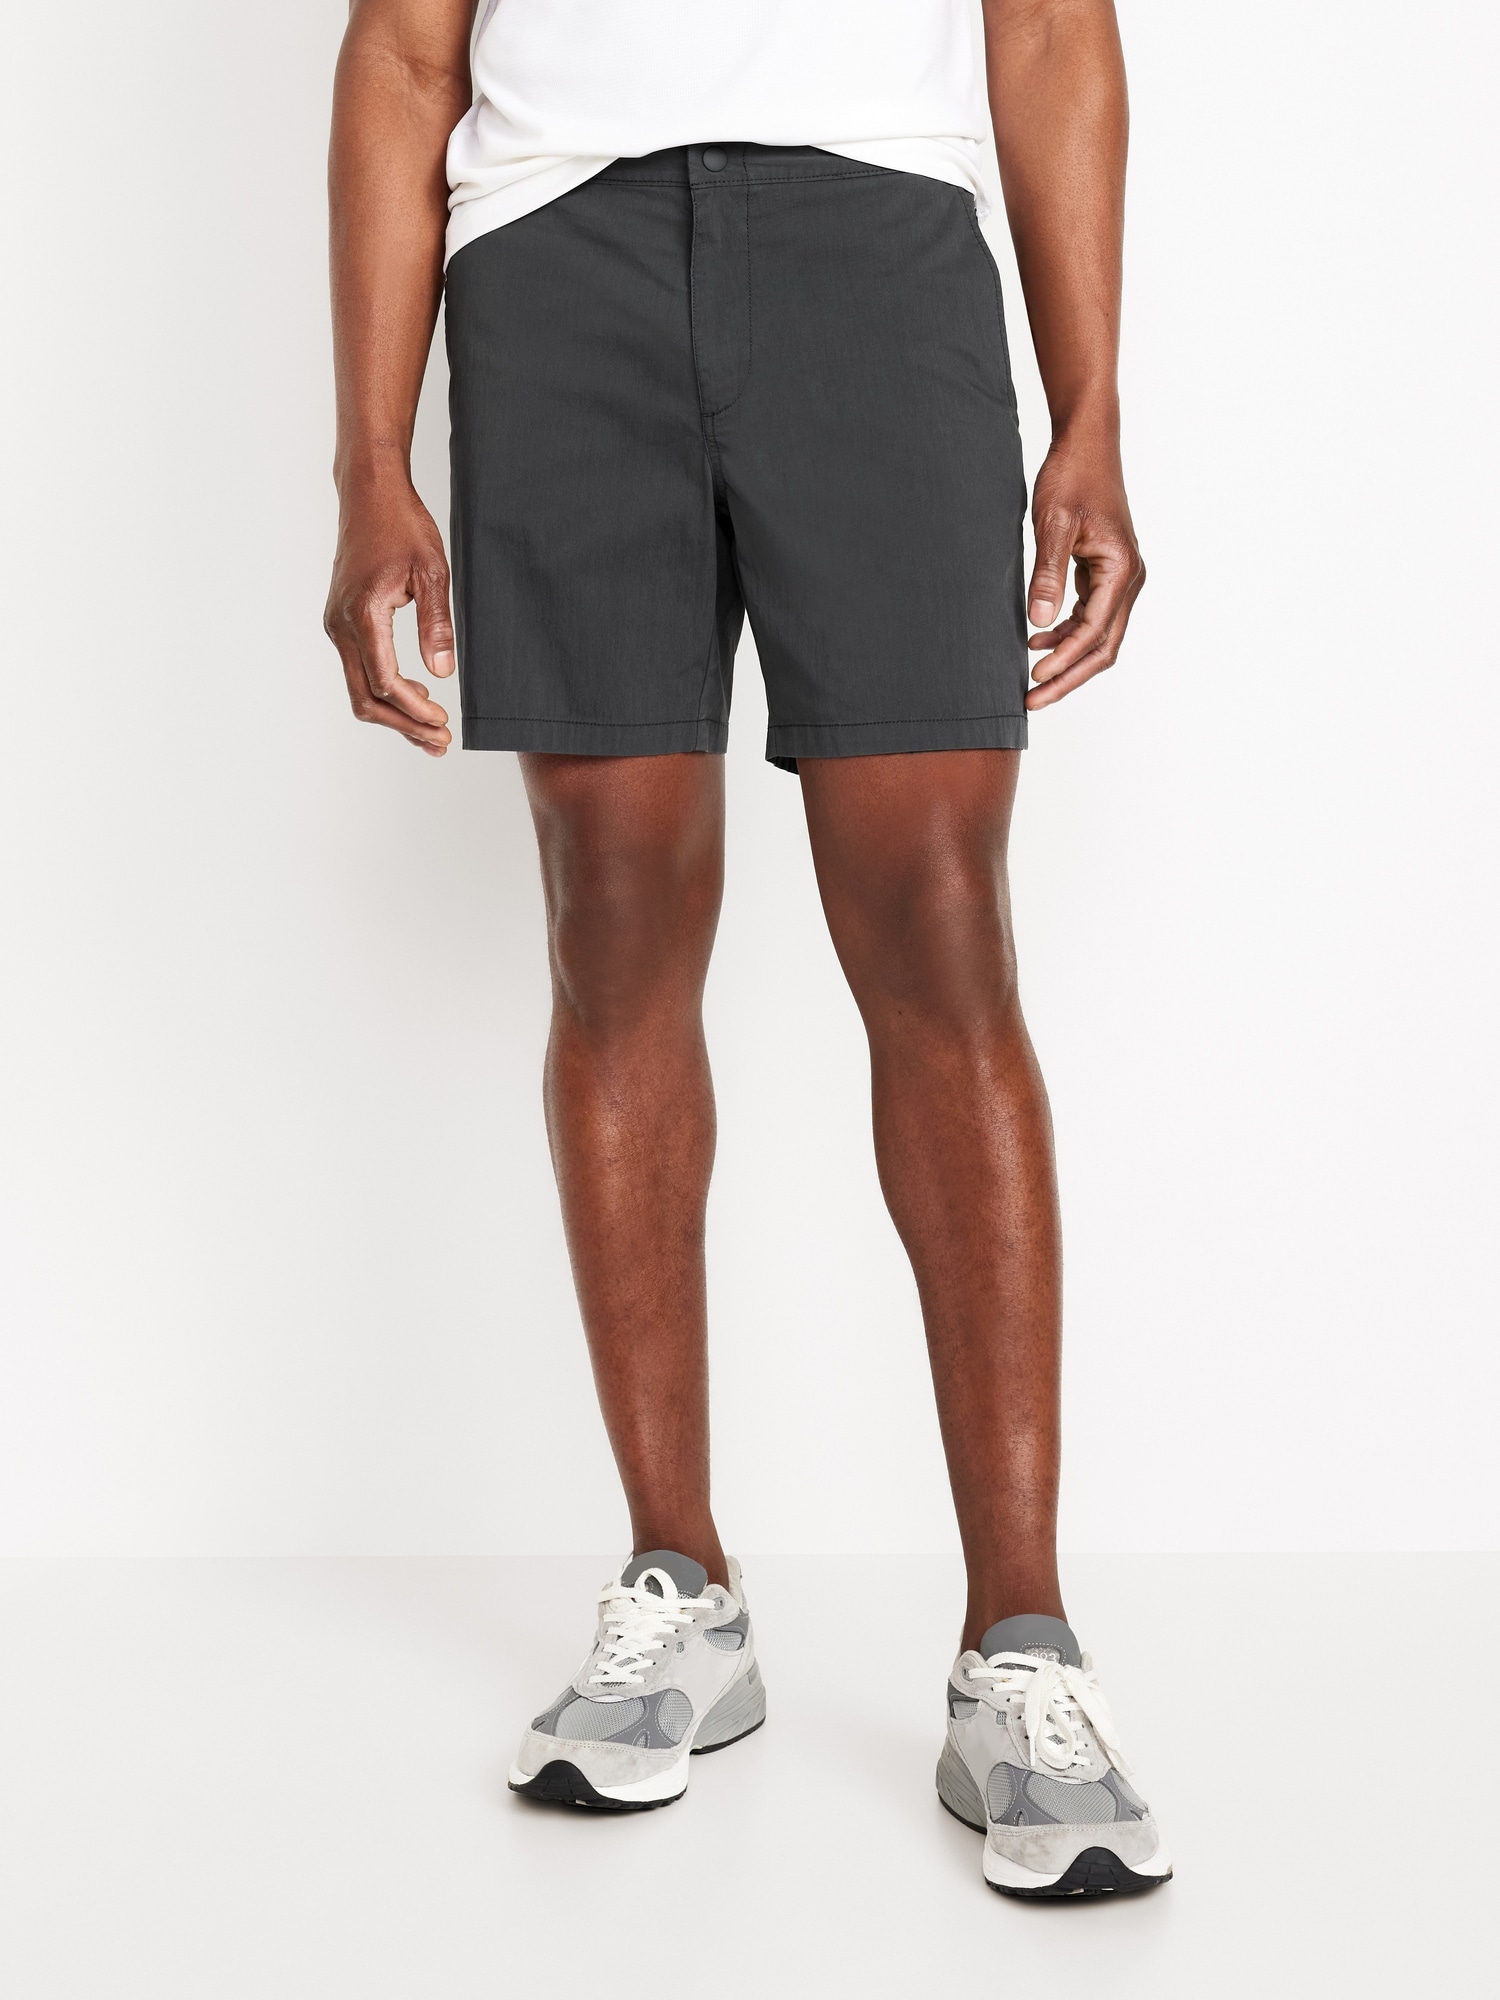 Relaxed Built-In Flex Tech Jogger Shorts -- 7-inch inseam